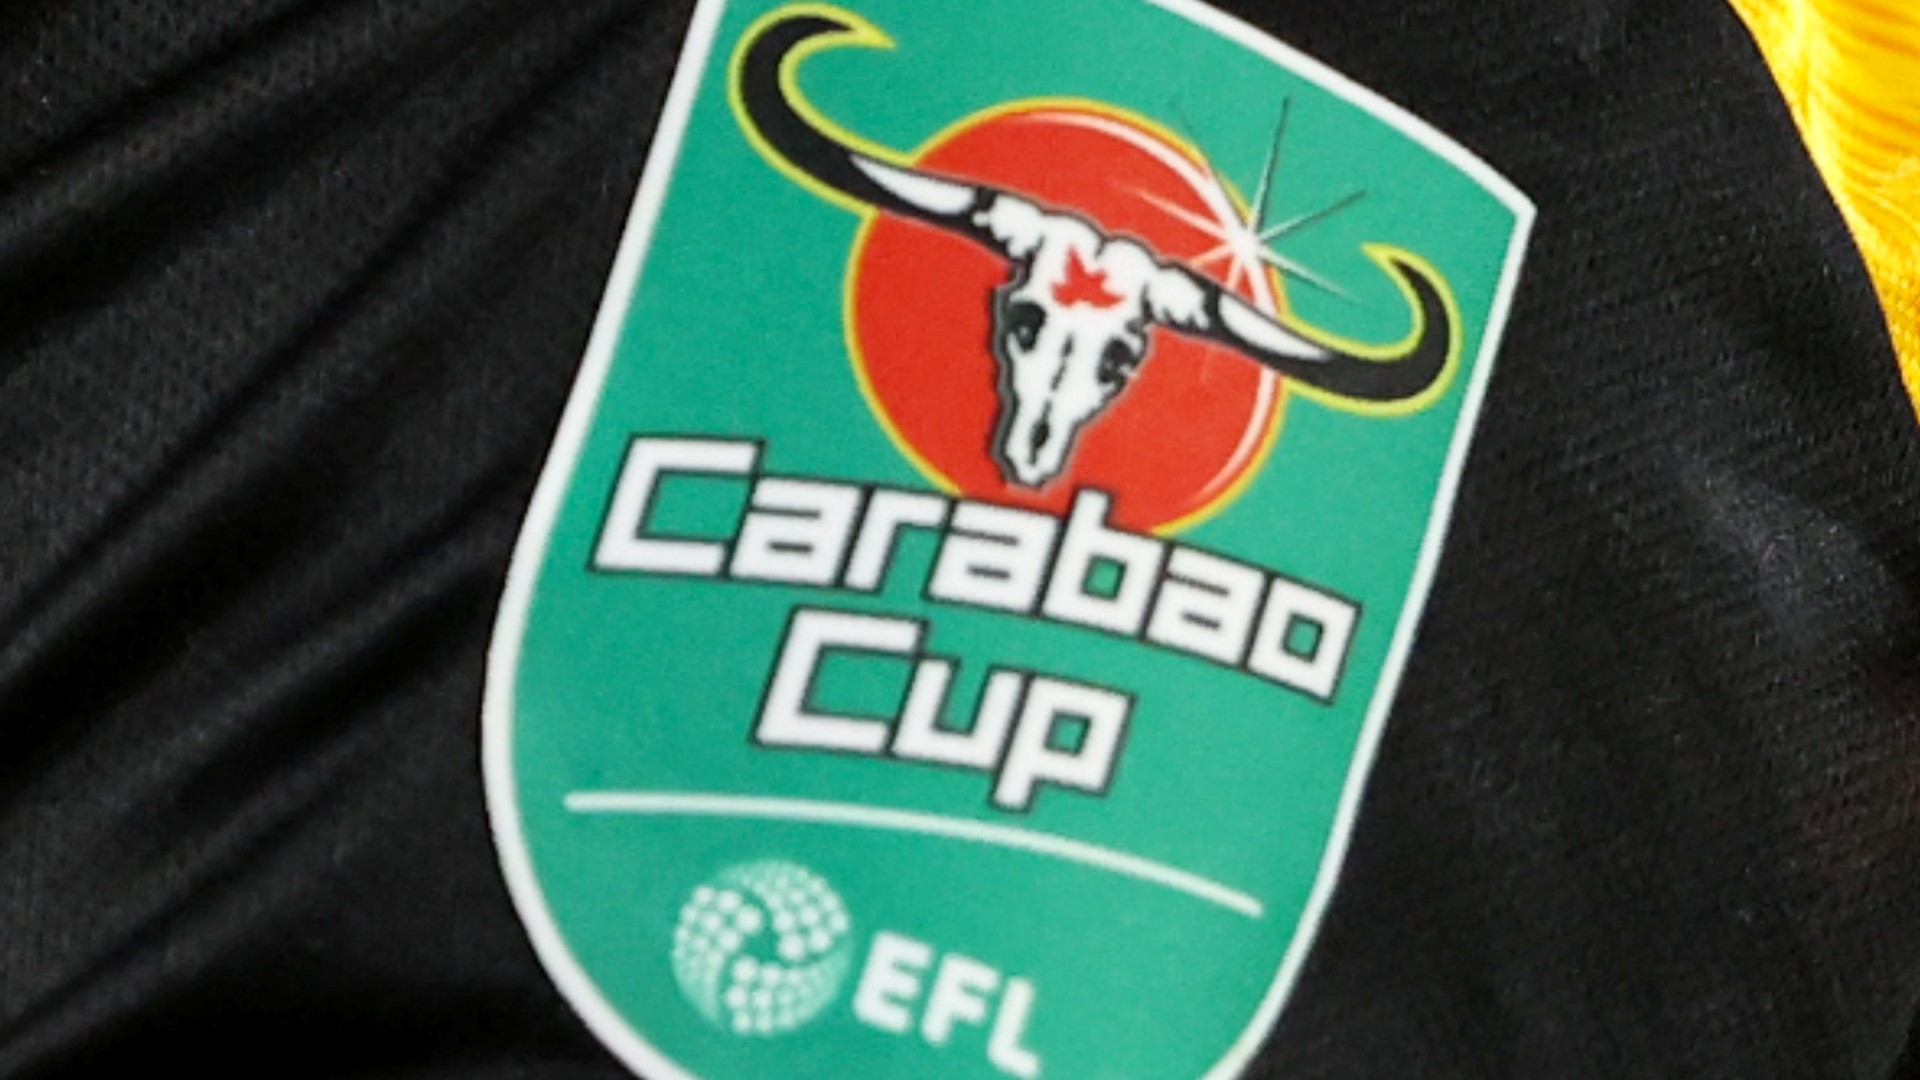 carabao cup league cup logo efl trophy 1knj8k4gphisq1fwe5crj4i8bo